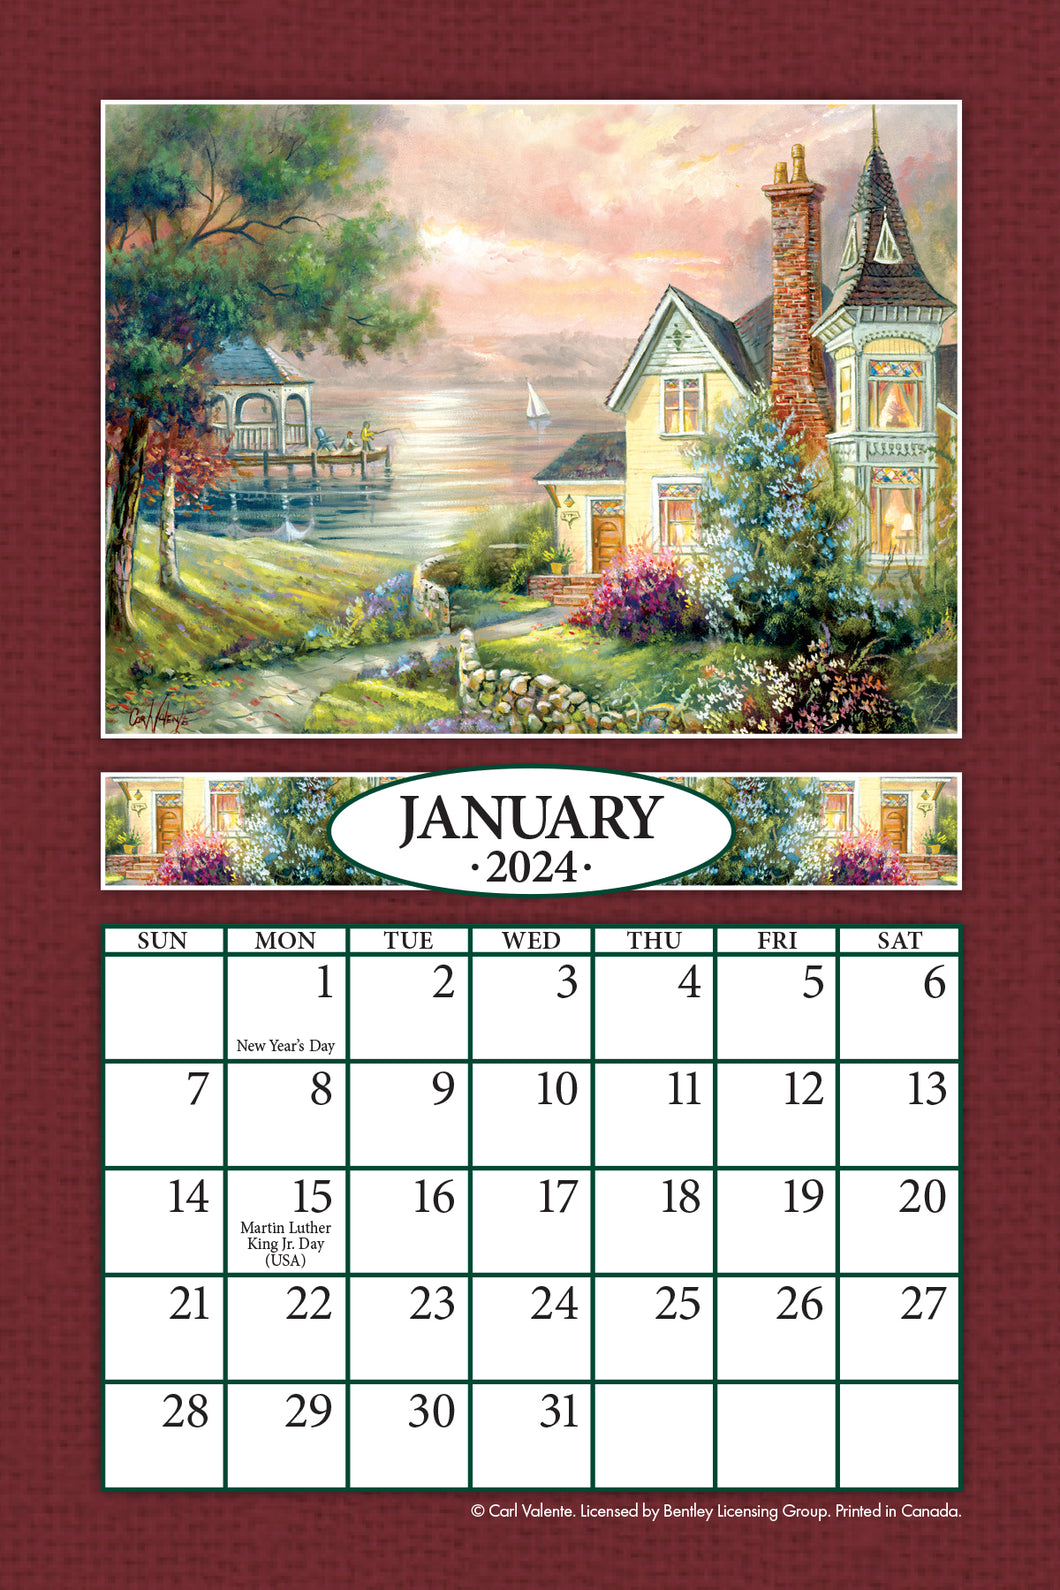 Bygone Days 2024 (Item #0360) - 4x6 Refill Sheet Calendar - BONUS POCKET PLANNER & BOOKMARK WHILE QUANTITIES LAST